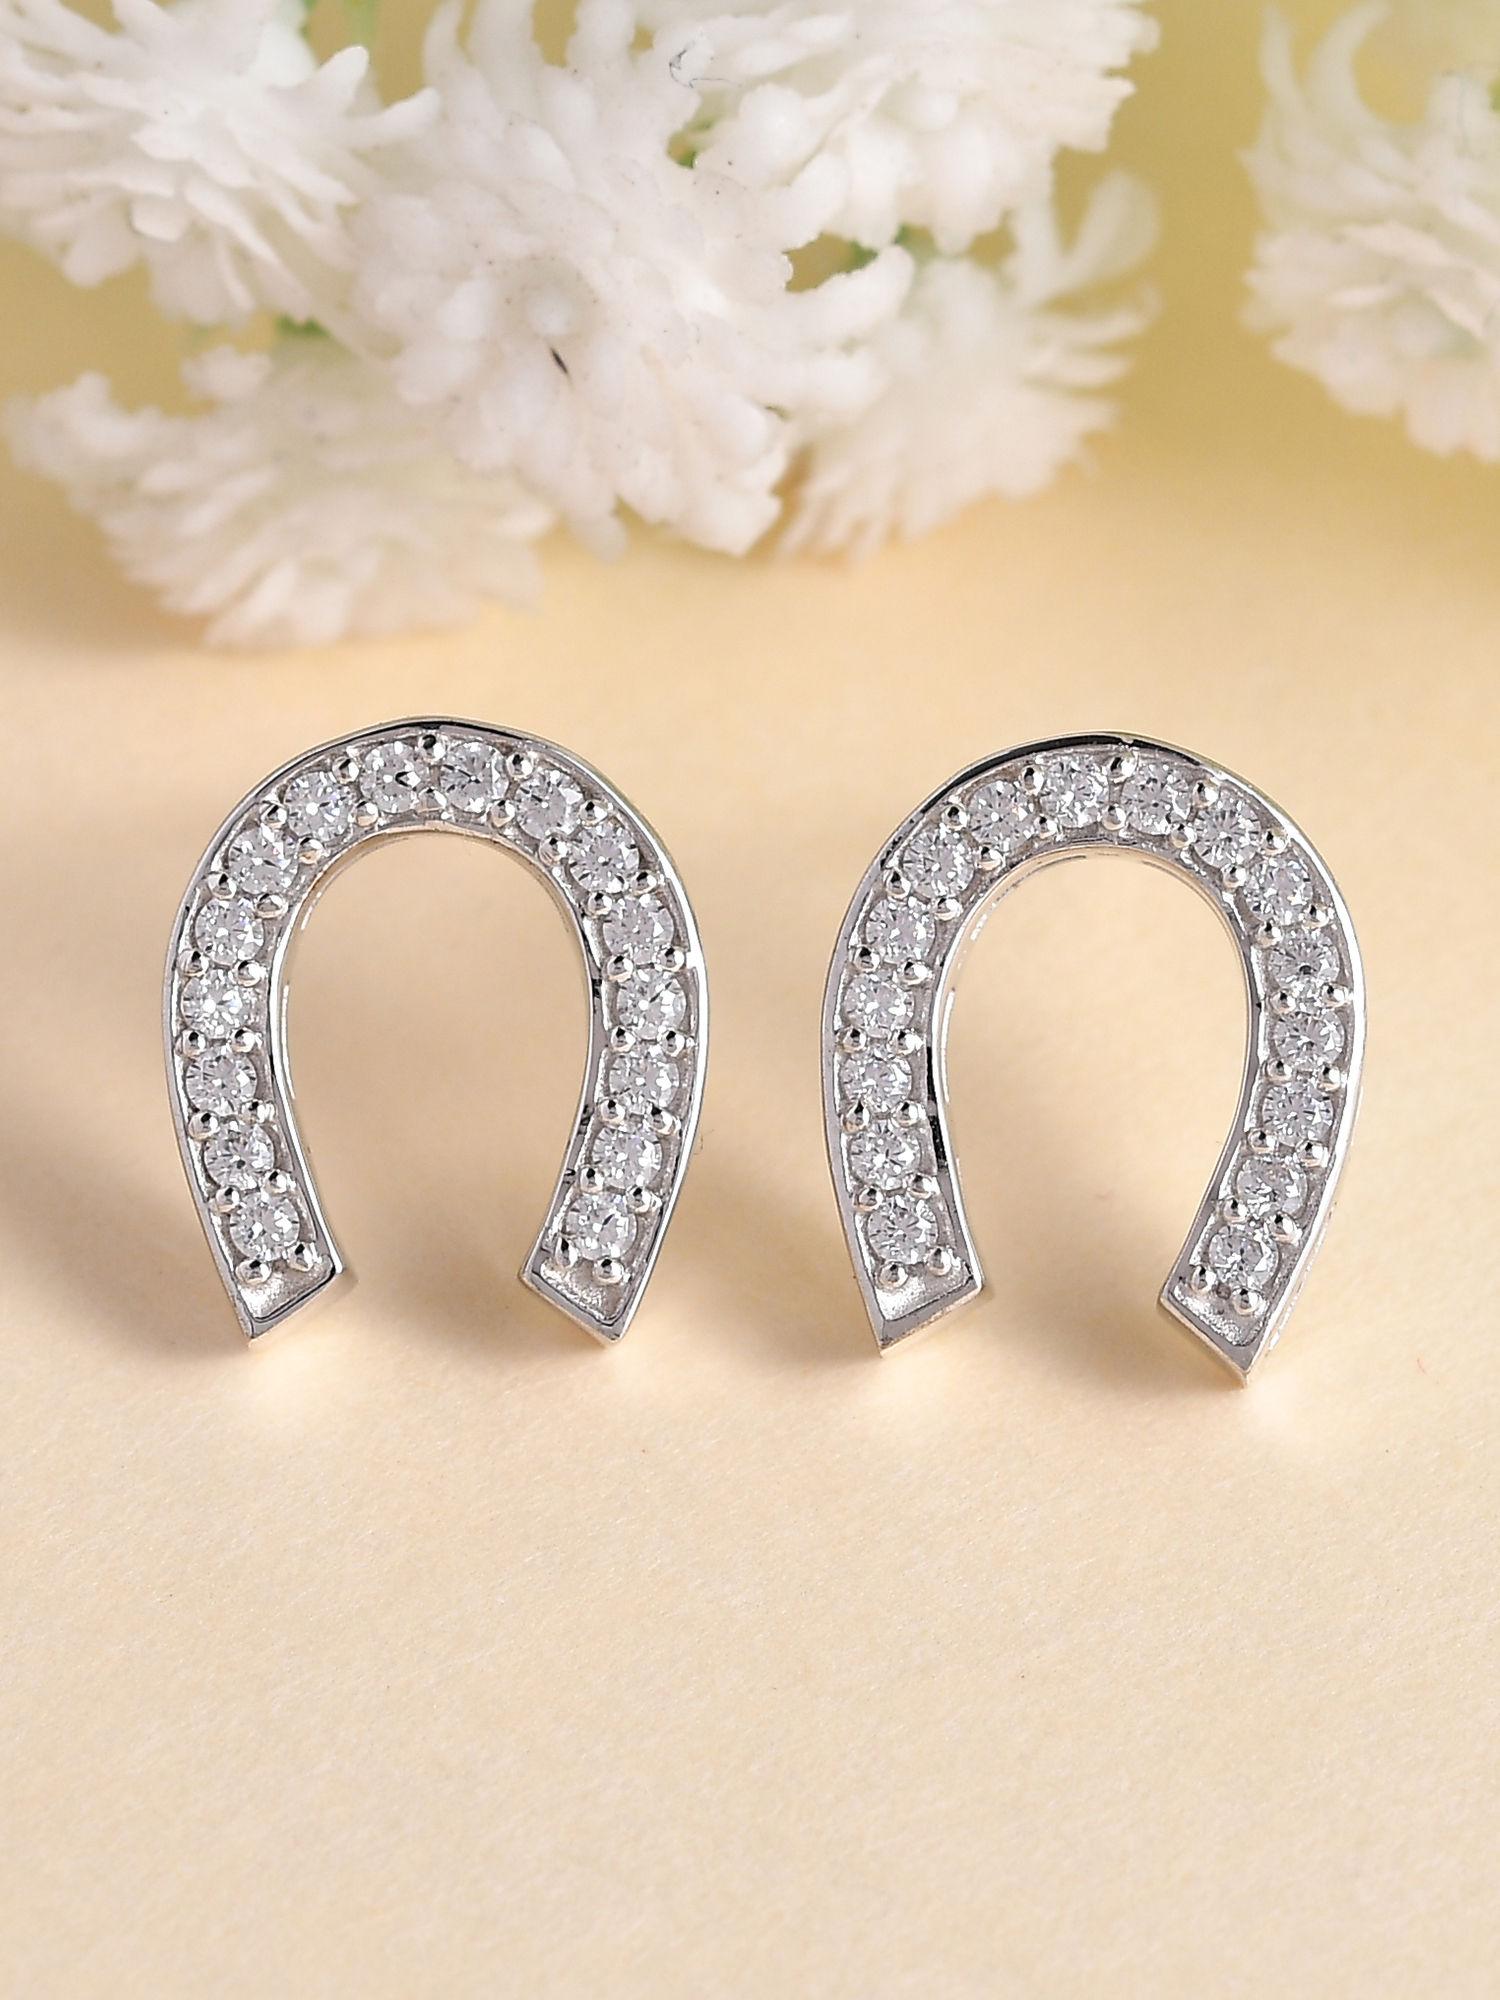 925 american diamonds lucky horseshoe studs earrings for women